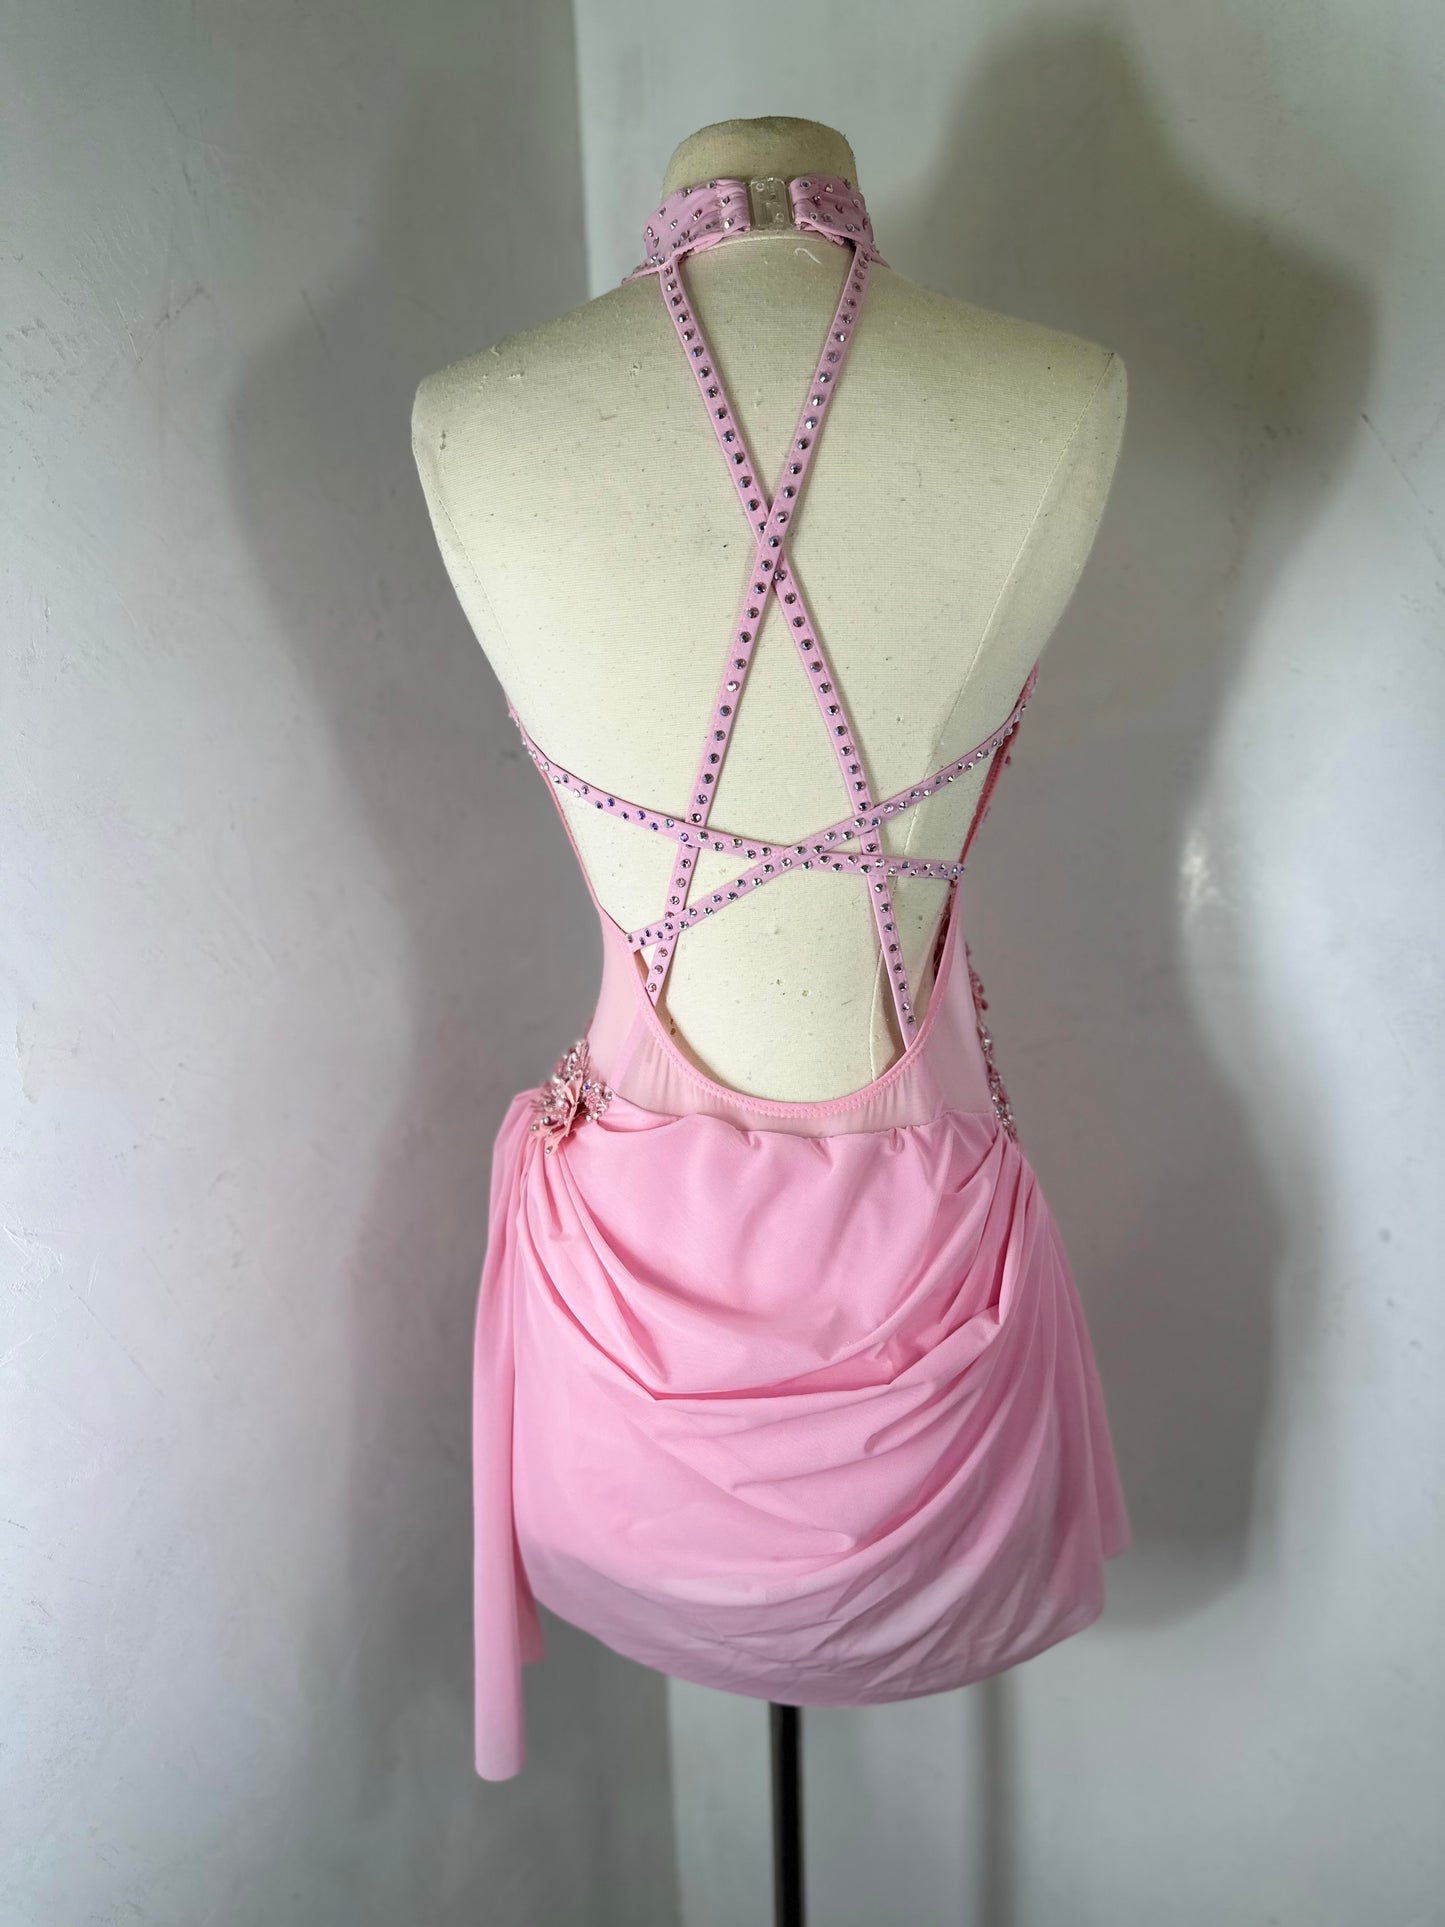 VENUS pink lyrical dance dance costume